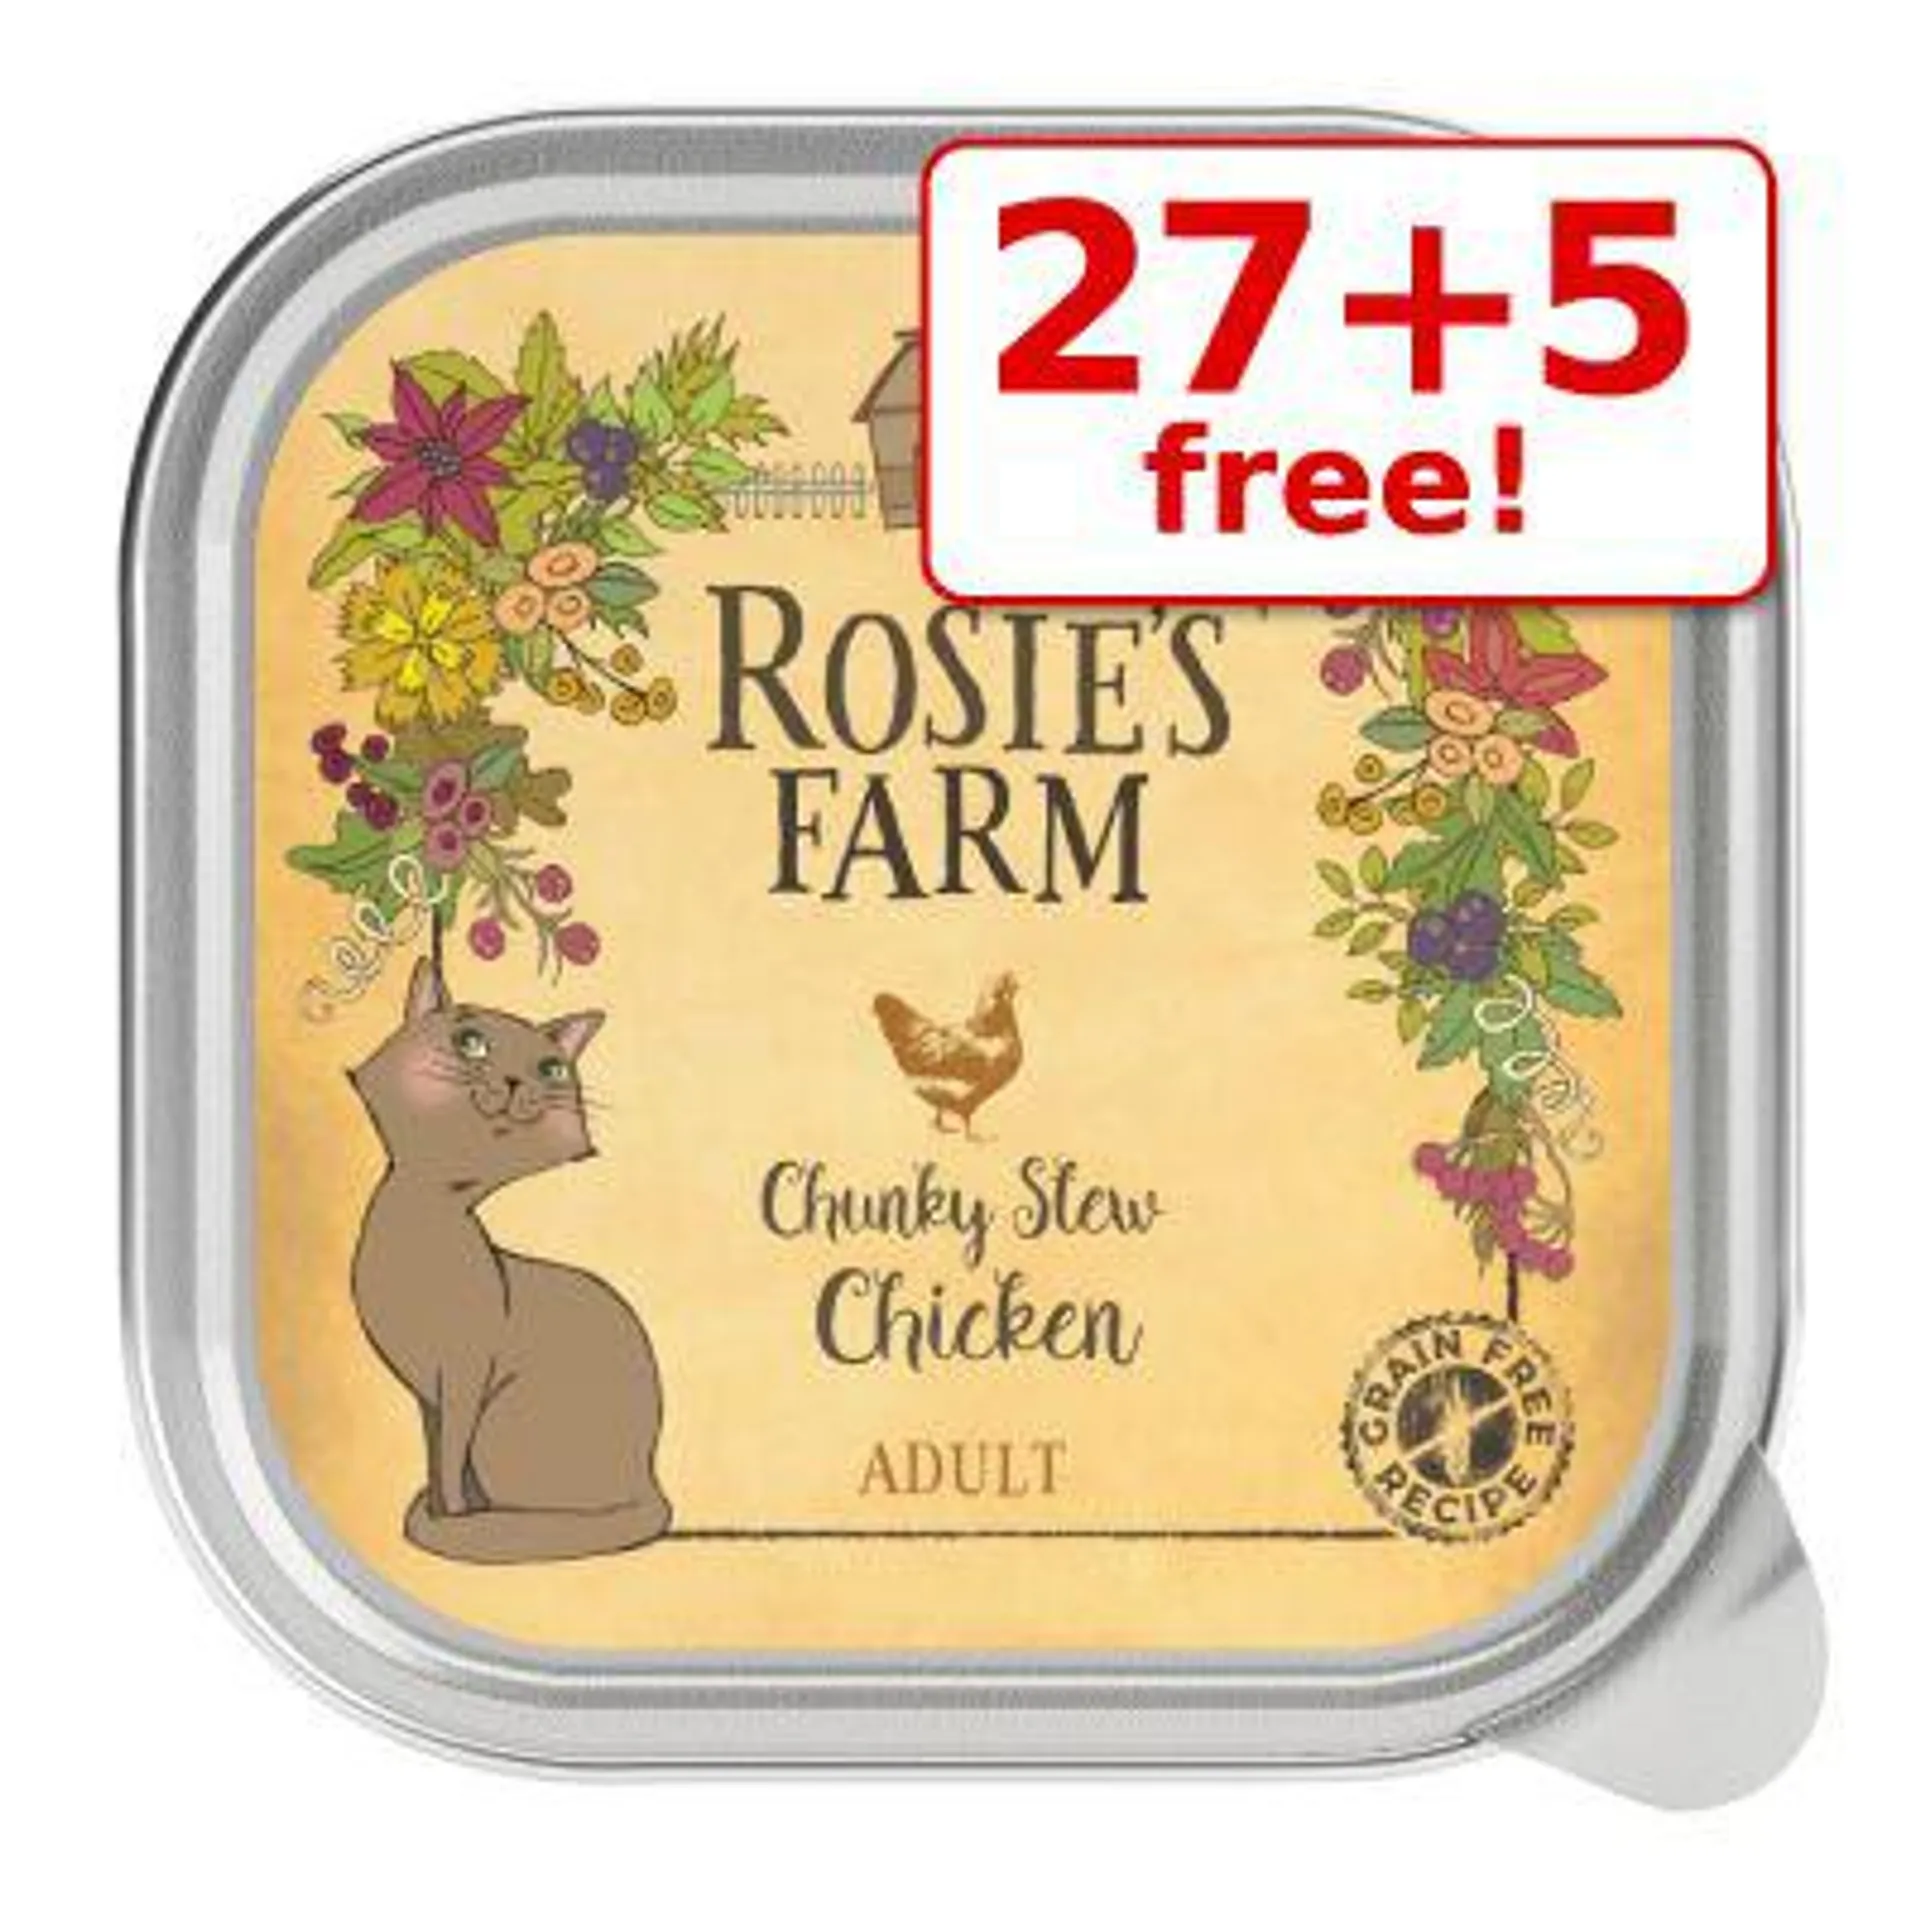 32 x 100g Rosie's Farm Wet Cat Food - 27 + 5 Free!*